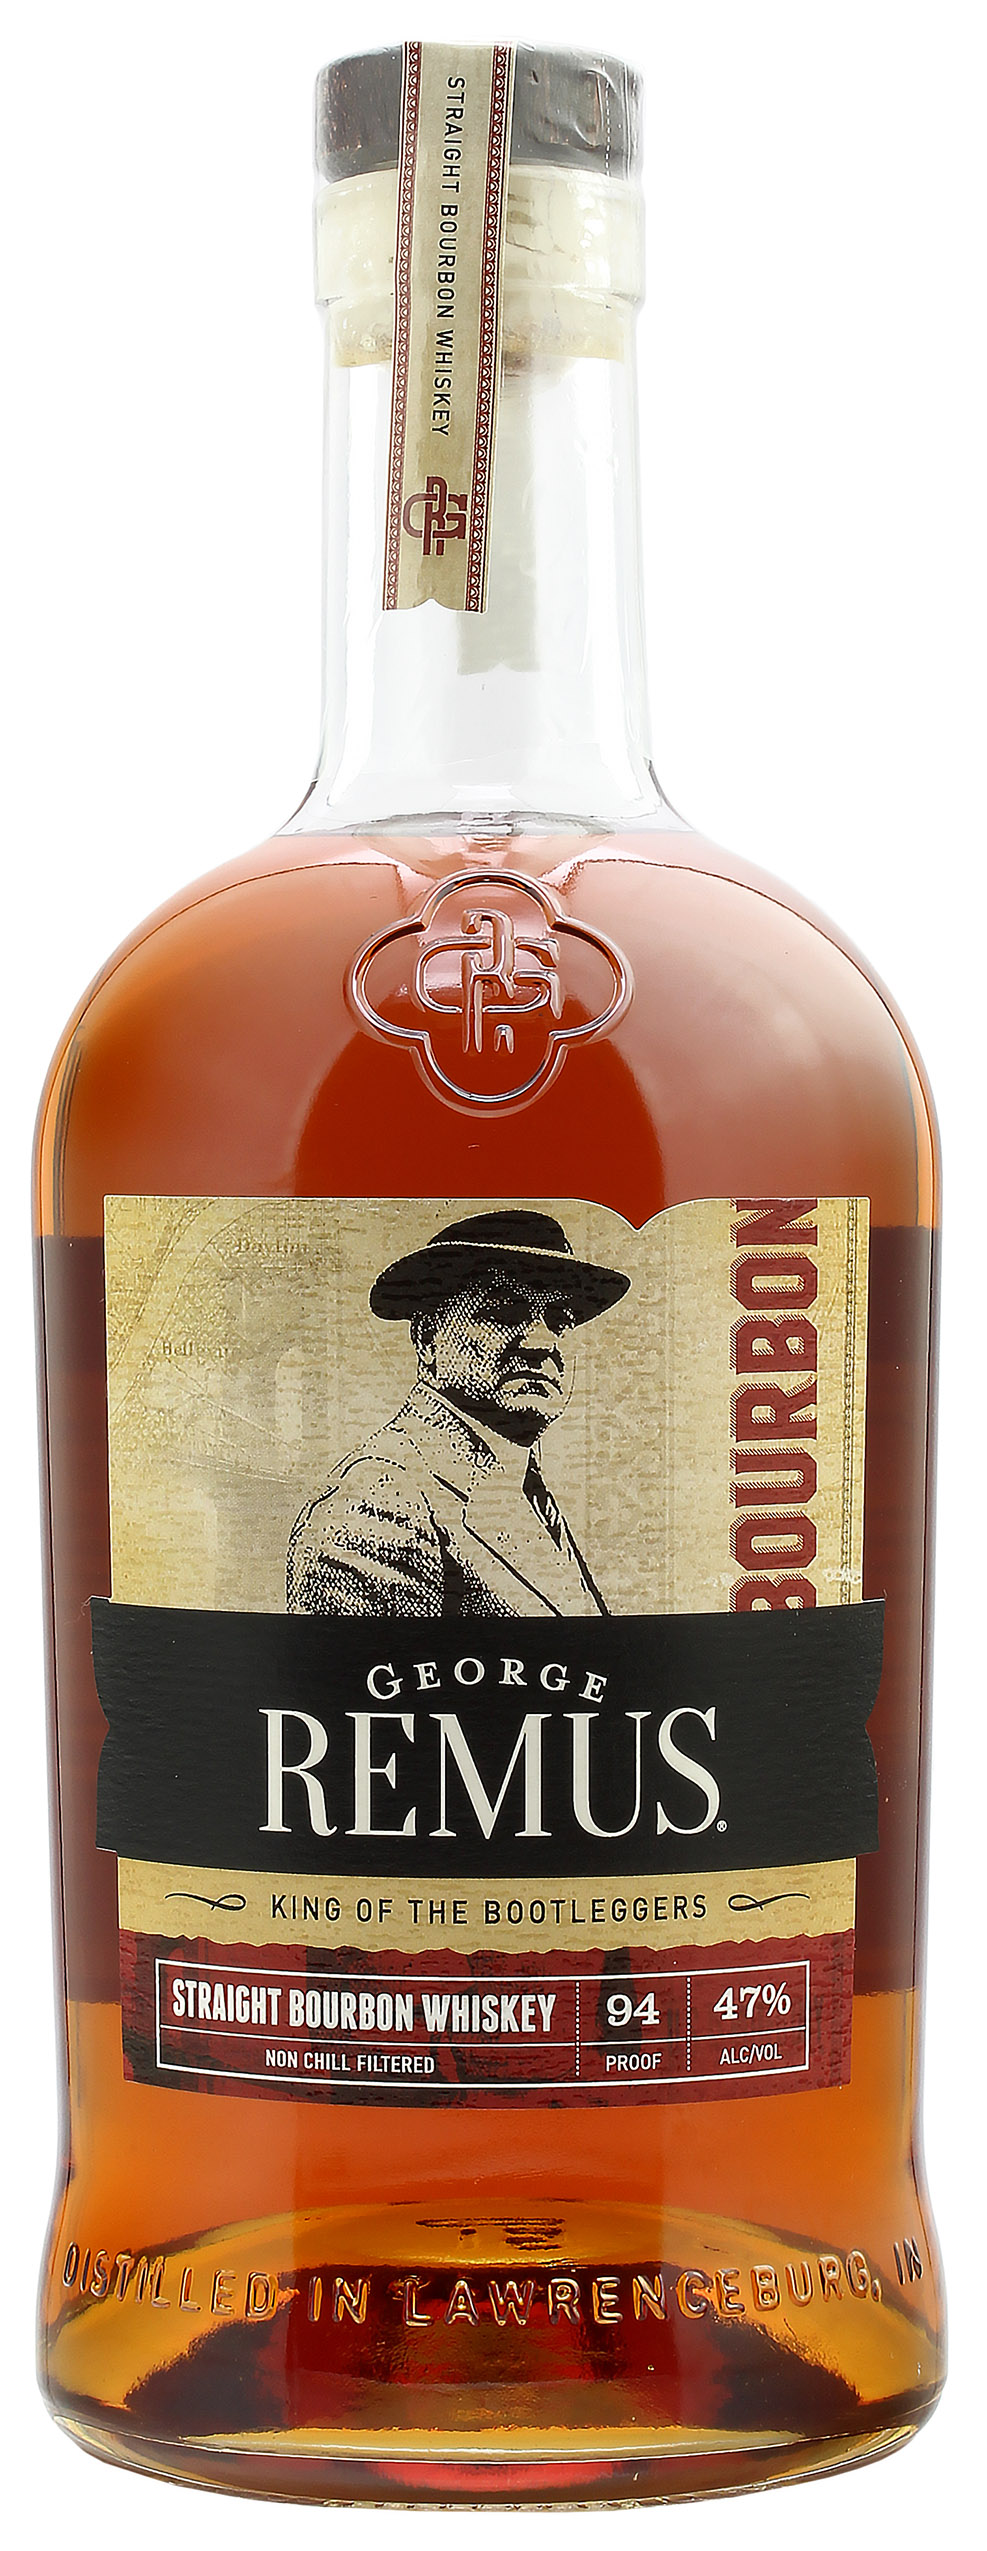 George Remus Straight Bourbon Whisky 47.0% 0,7l